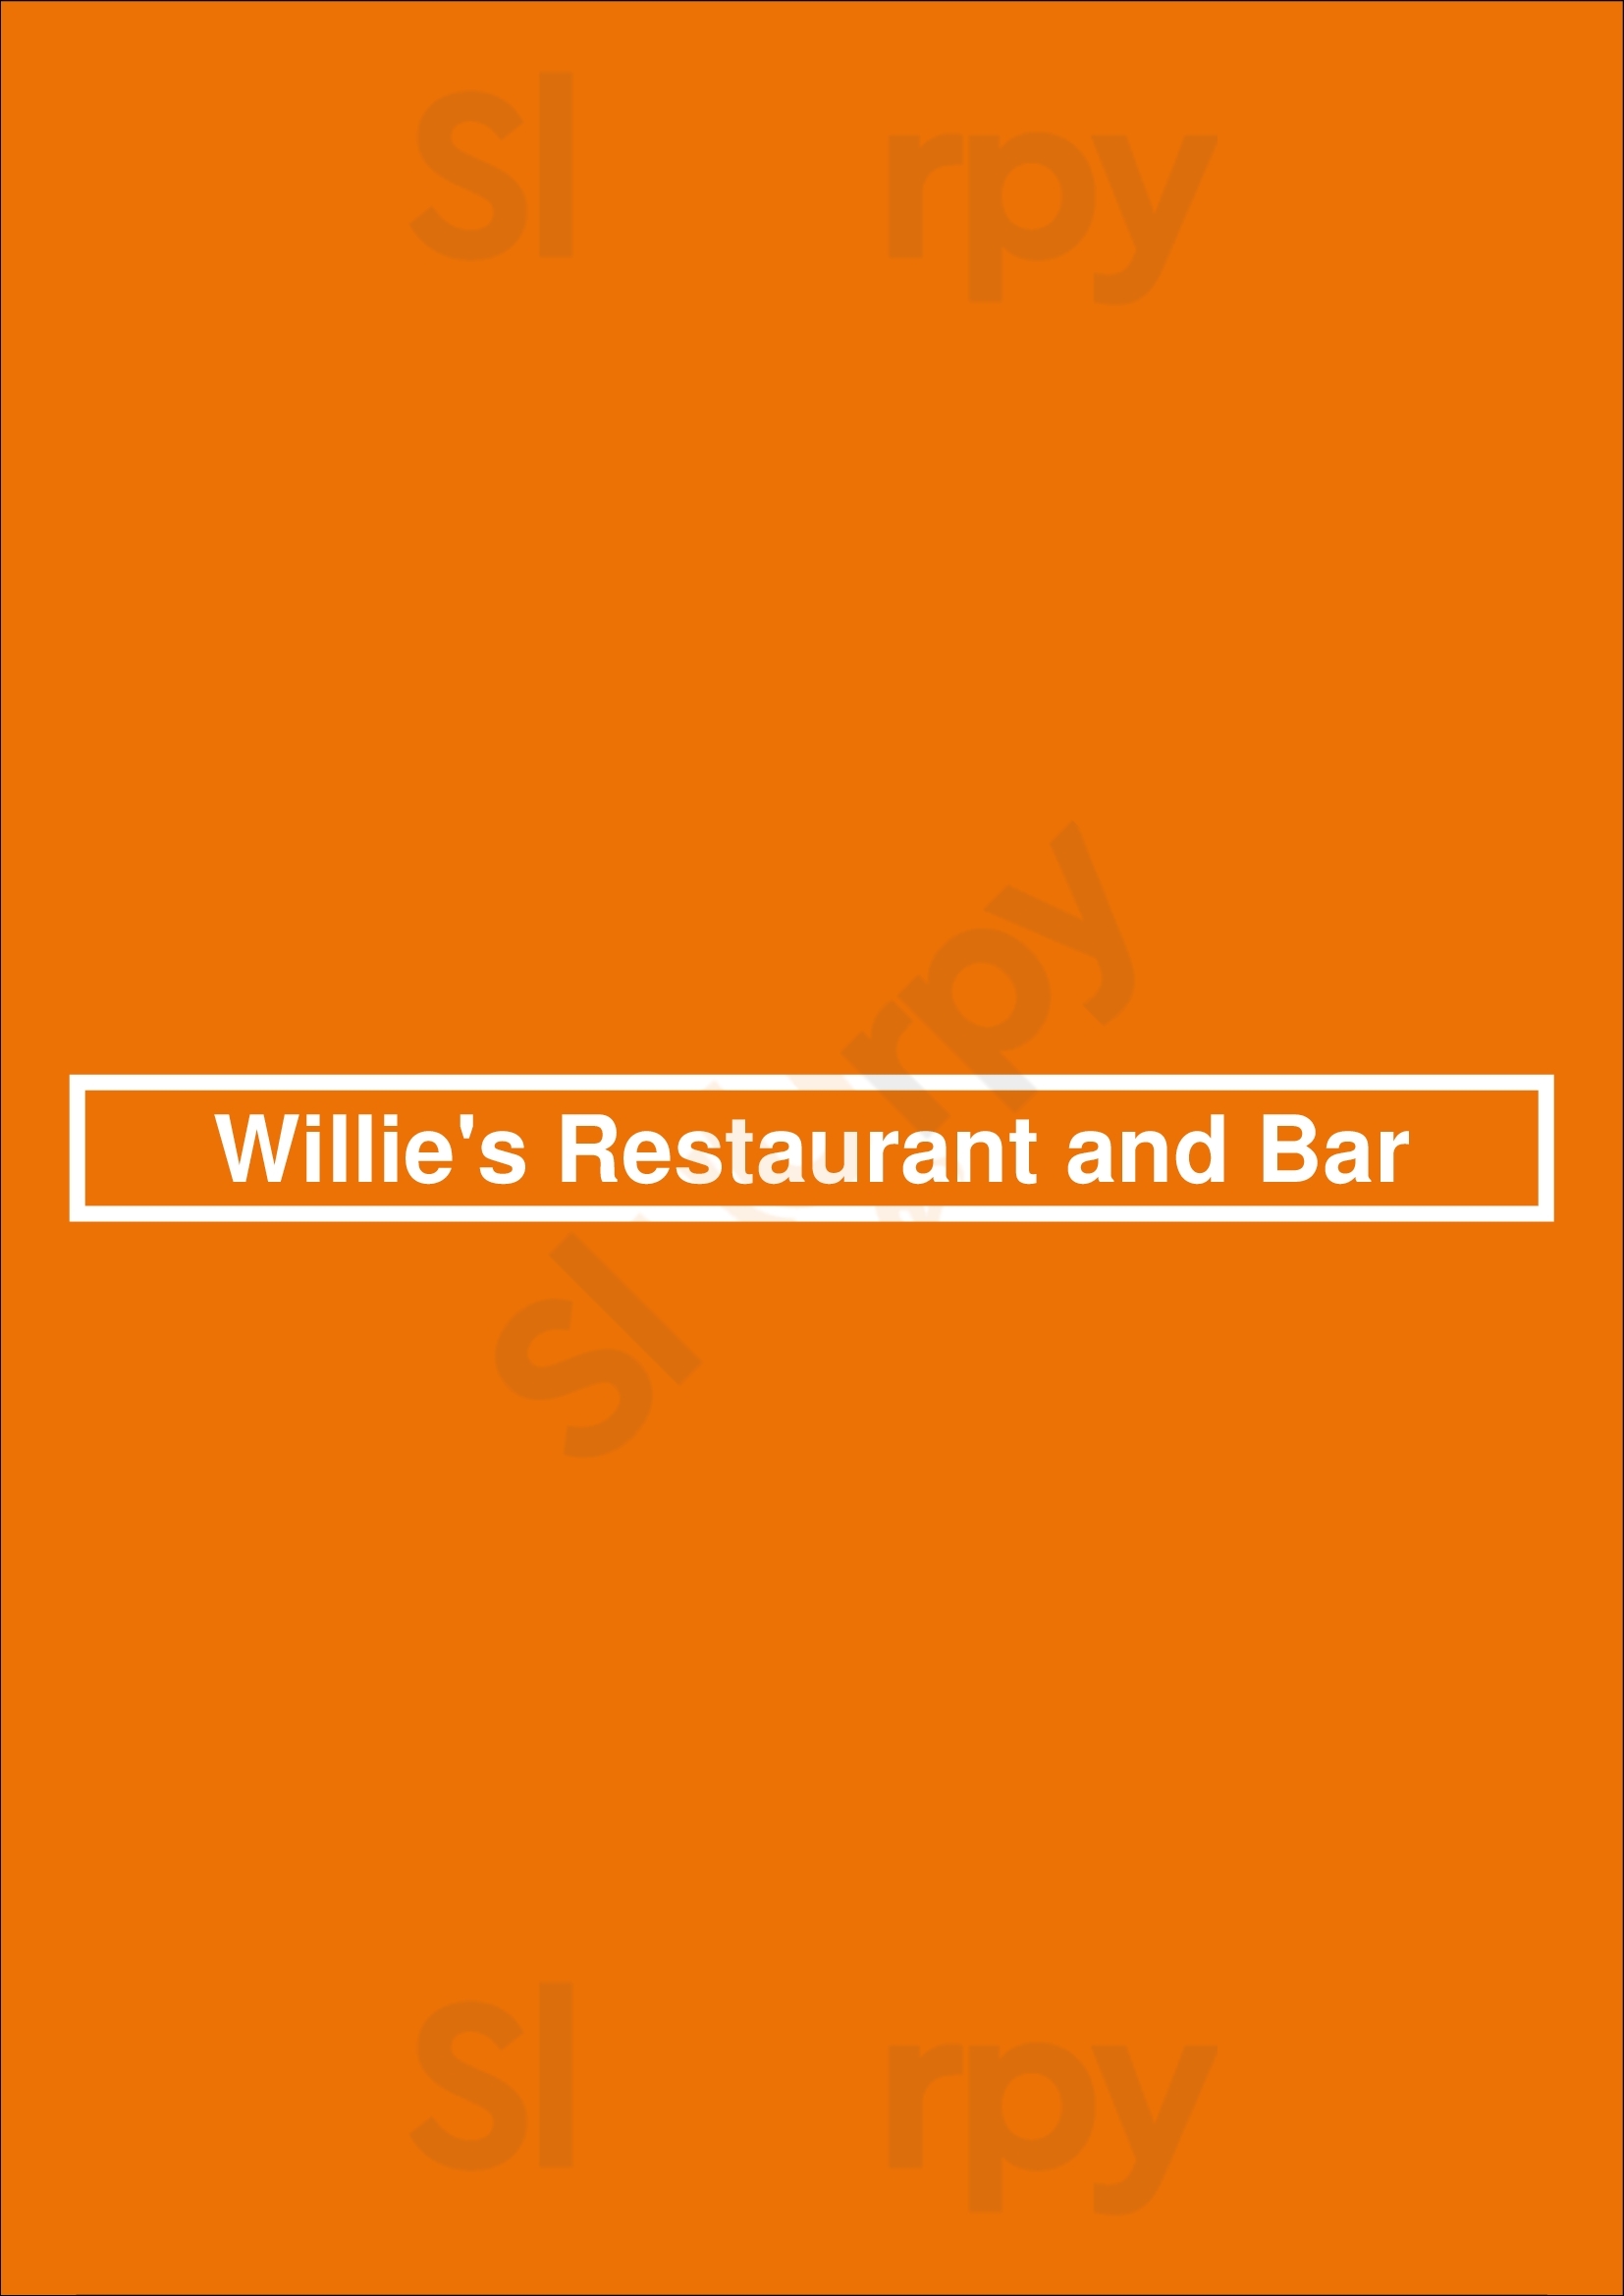 Willie's Restaurant And Bar Baton Rouge Menu - 1